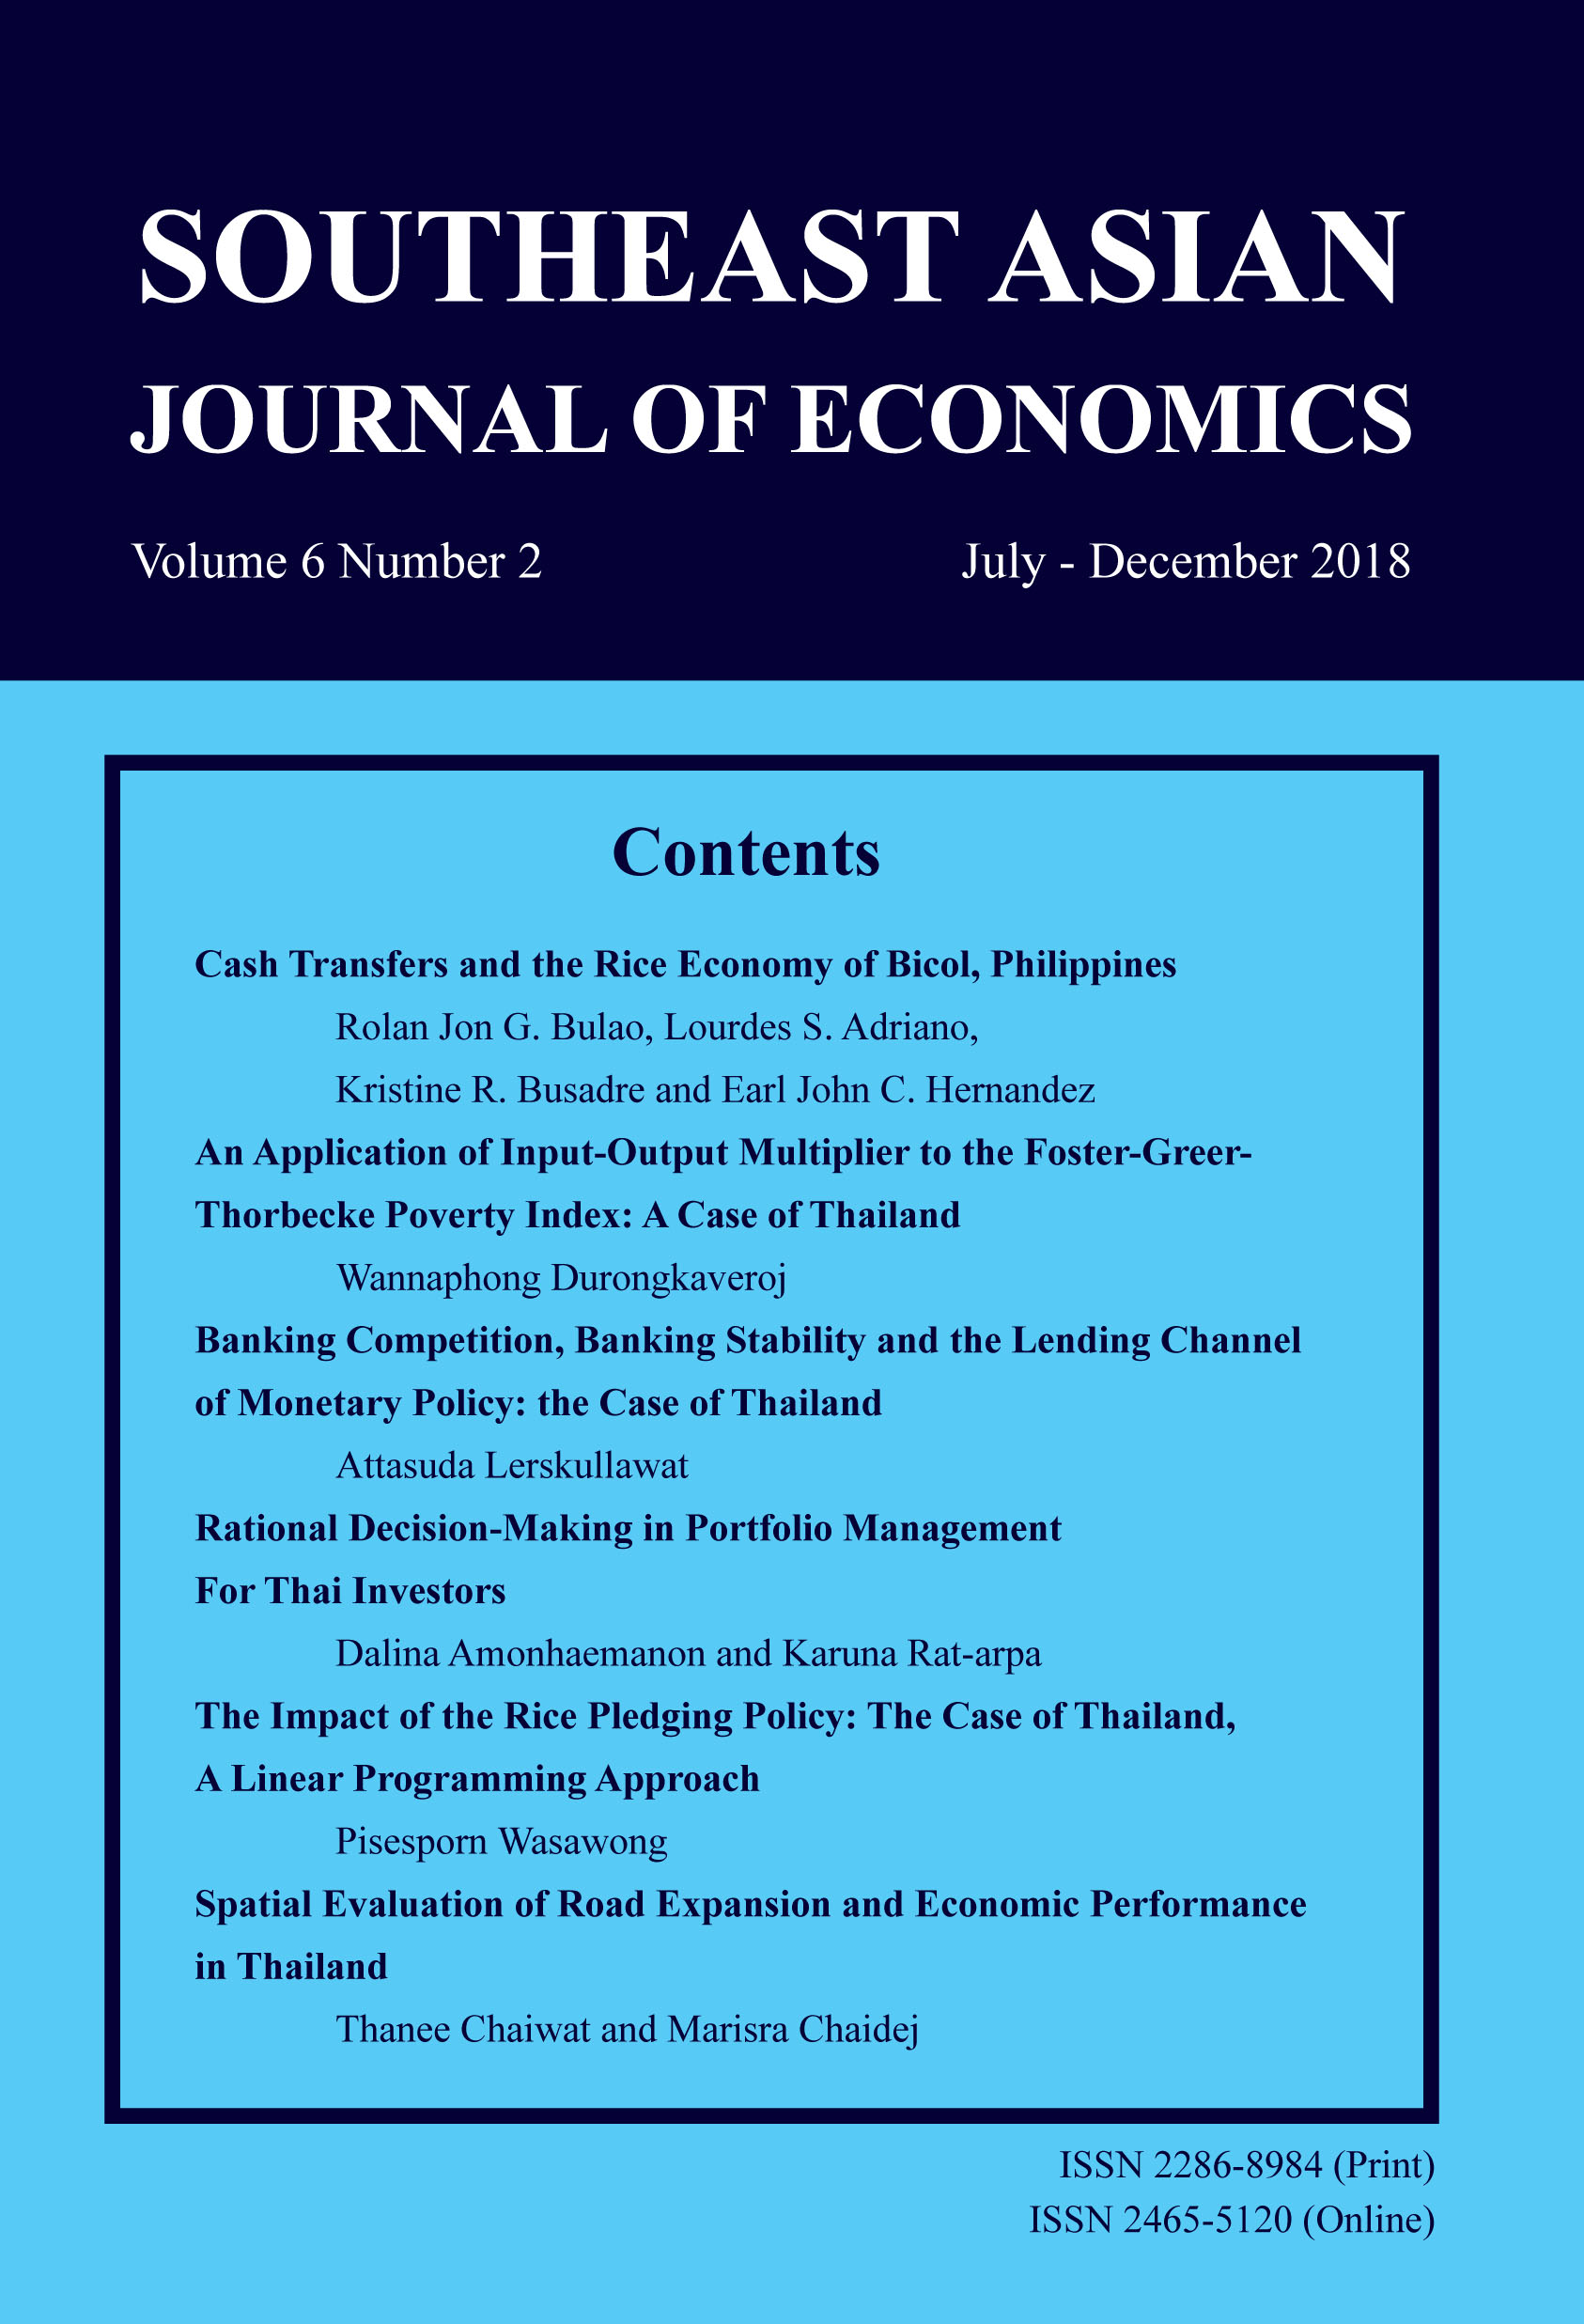 					View Southeast Asian Journal of Economics, Vol. 5  No. 1 (January - June 2017)
				